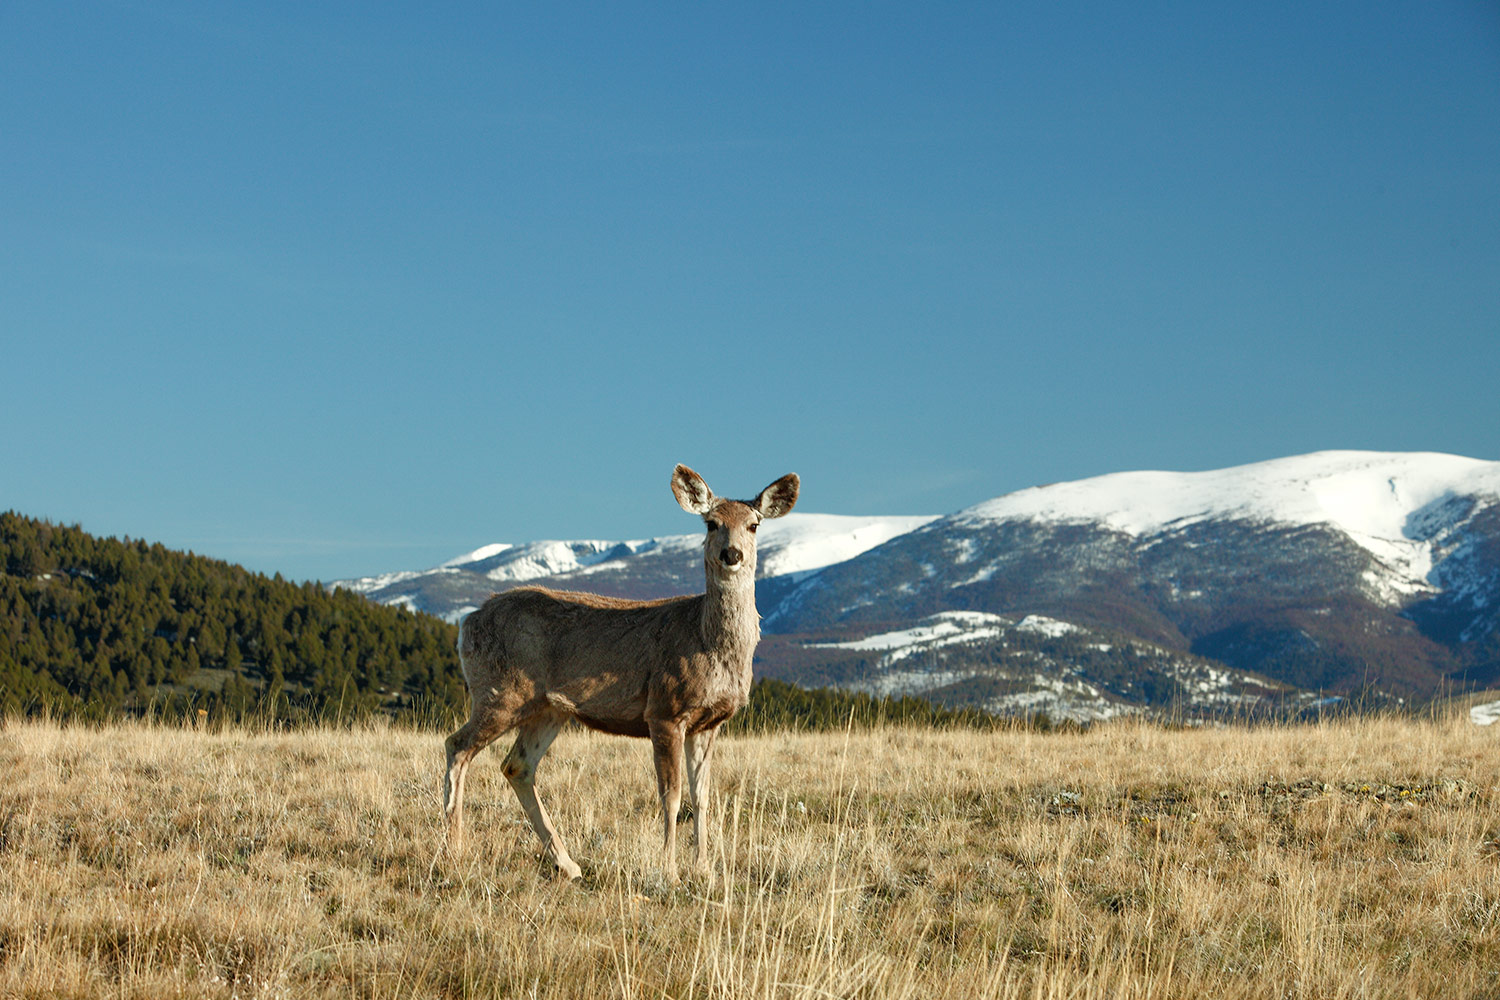 Grassy Mountain Deer